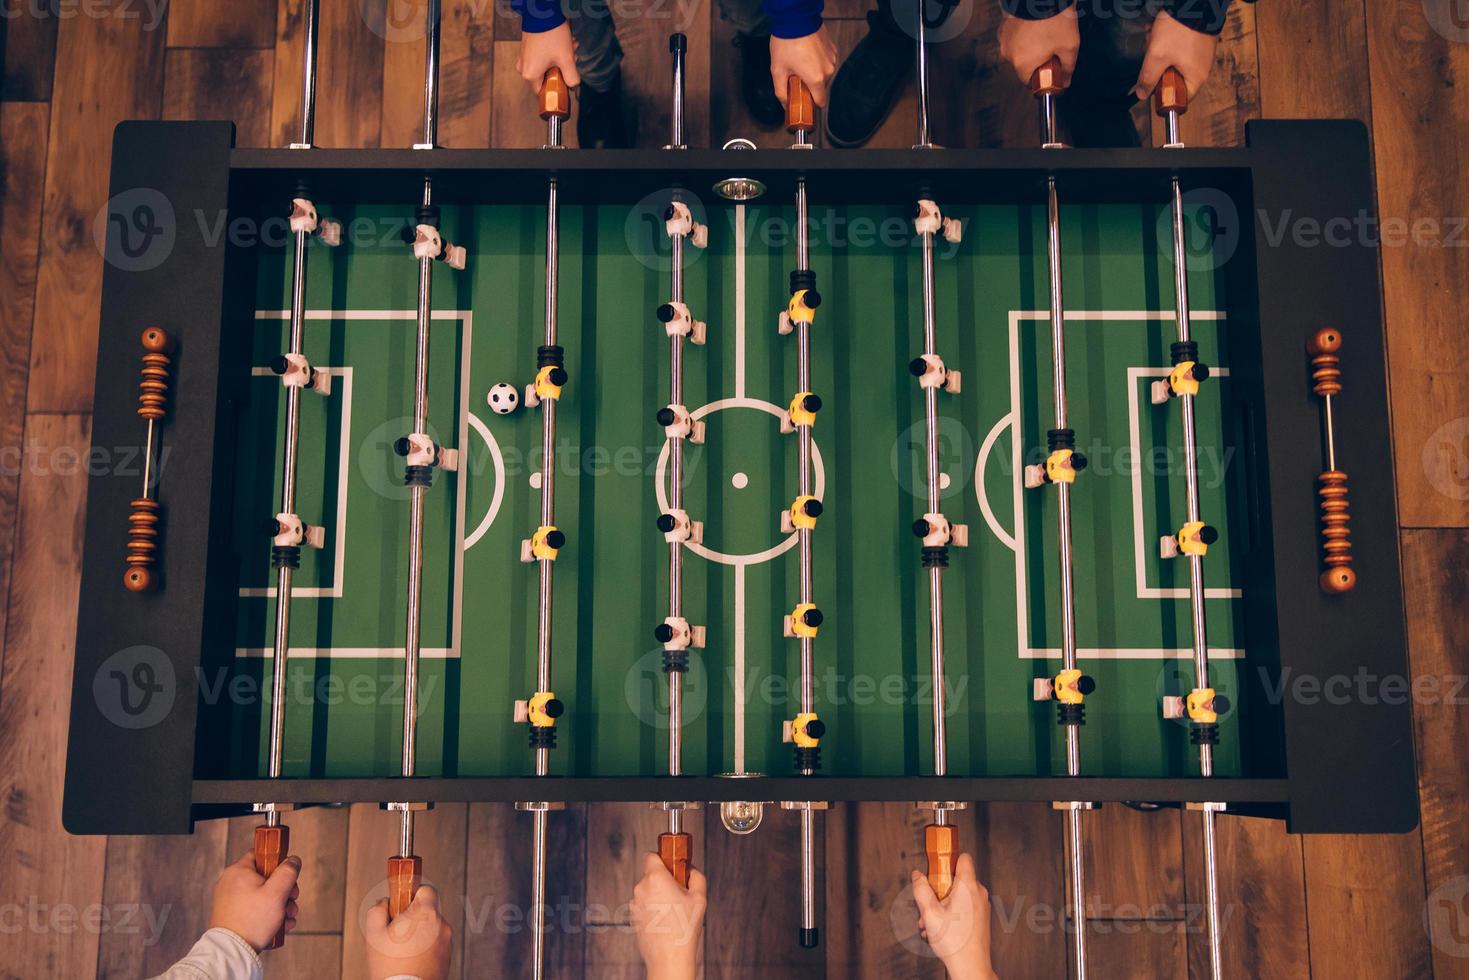 Foosball game. Top view of foosball table on the wooden floor photo